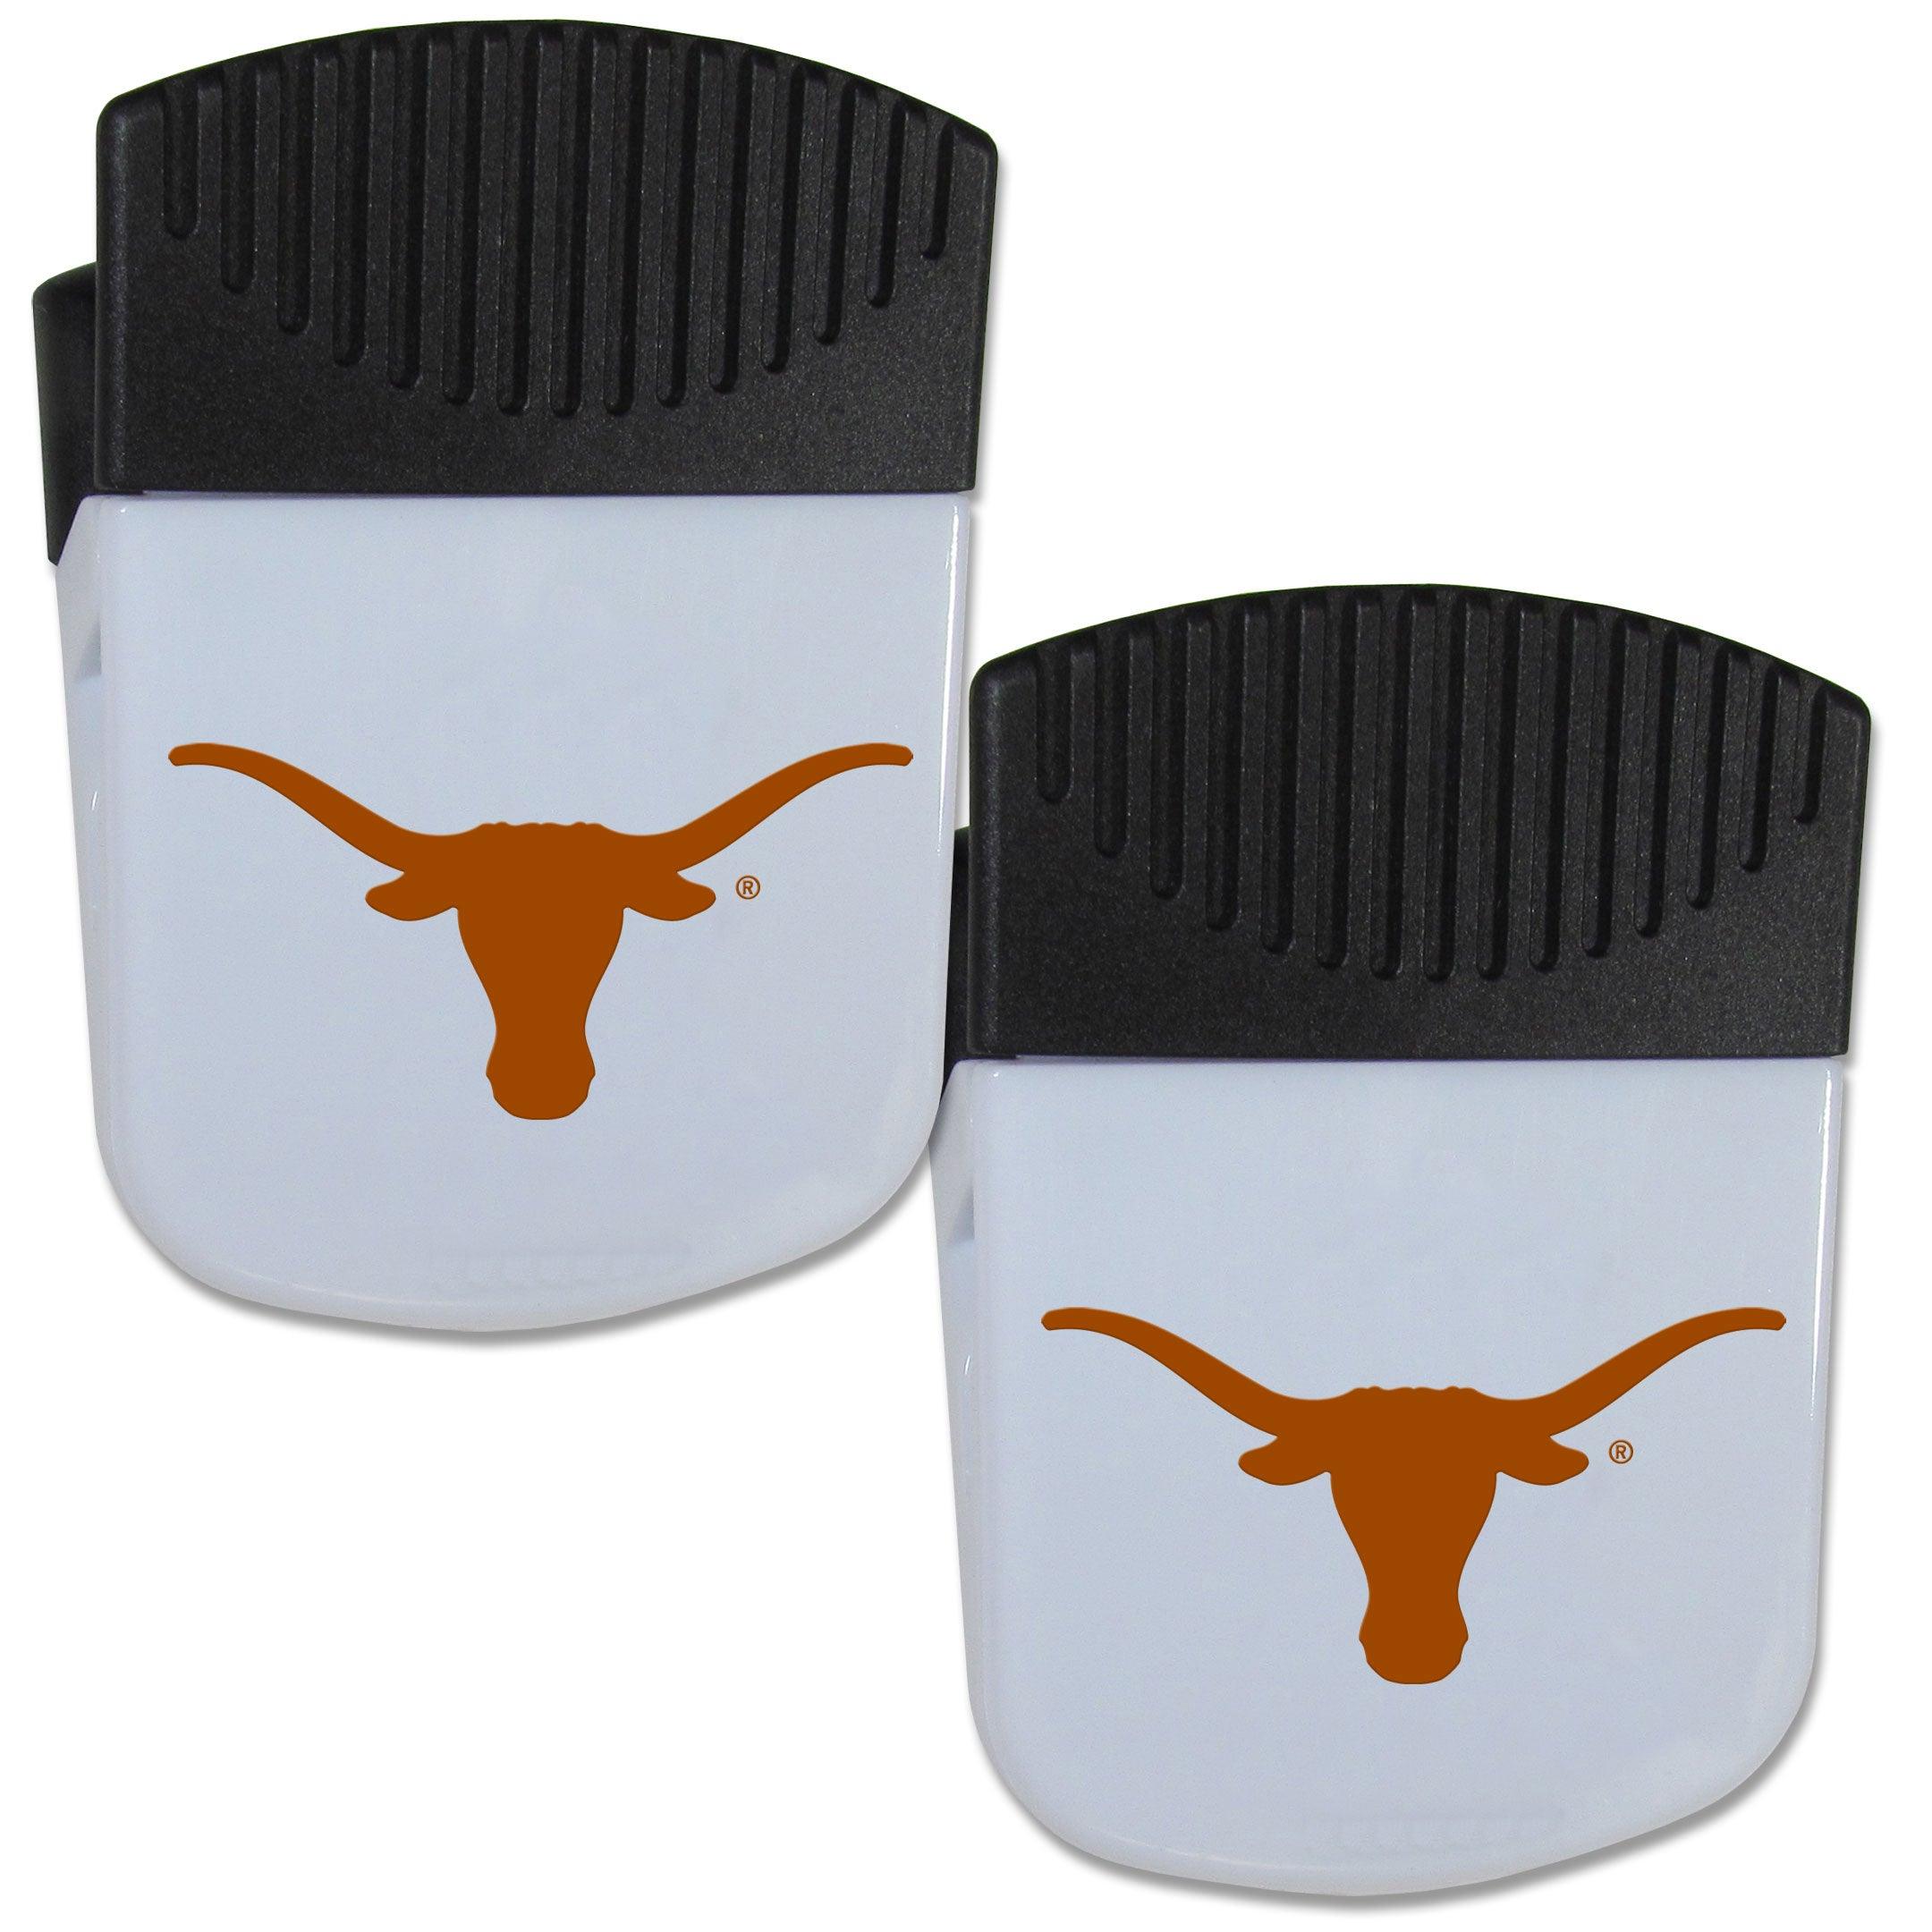 Texas Longhorns Chip Clip Magnet with Bottle Opener, 2 pack - Flyclothing LLC